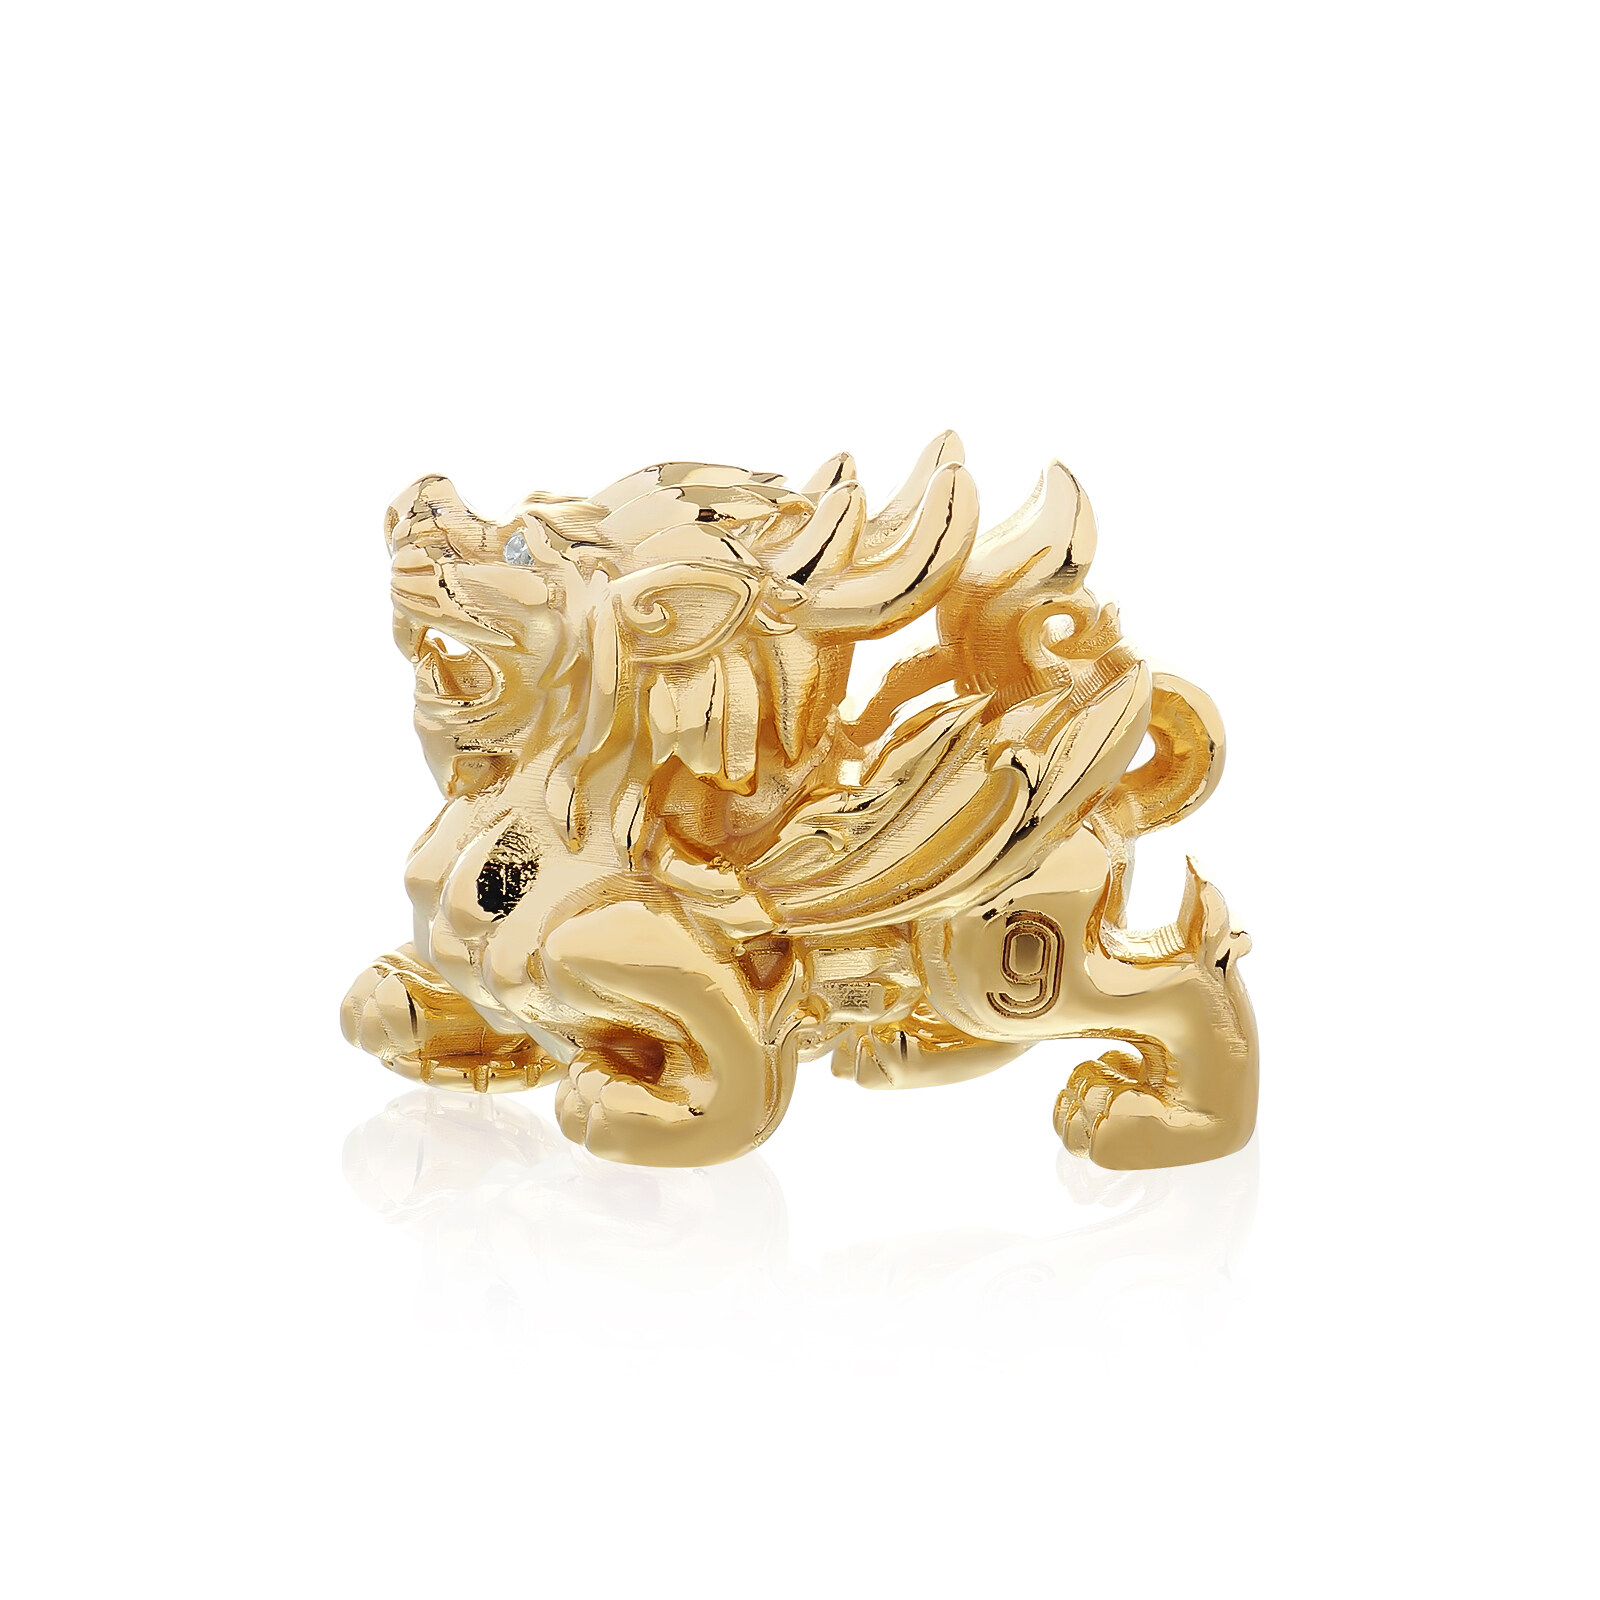 The Golden of Pixiu Bead -Xtreme บีดส์ประคำเงินแท้ 925 ลายปี่เซี๊ยะมงคล (ตัวเมีย) ขัดเงาพิเศษชุบบทองคำแท้ 24 กะรัต ฝังพลอยคริสตัล